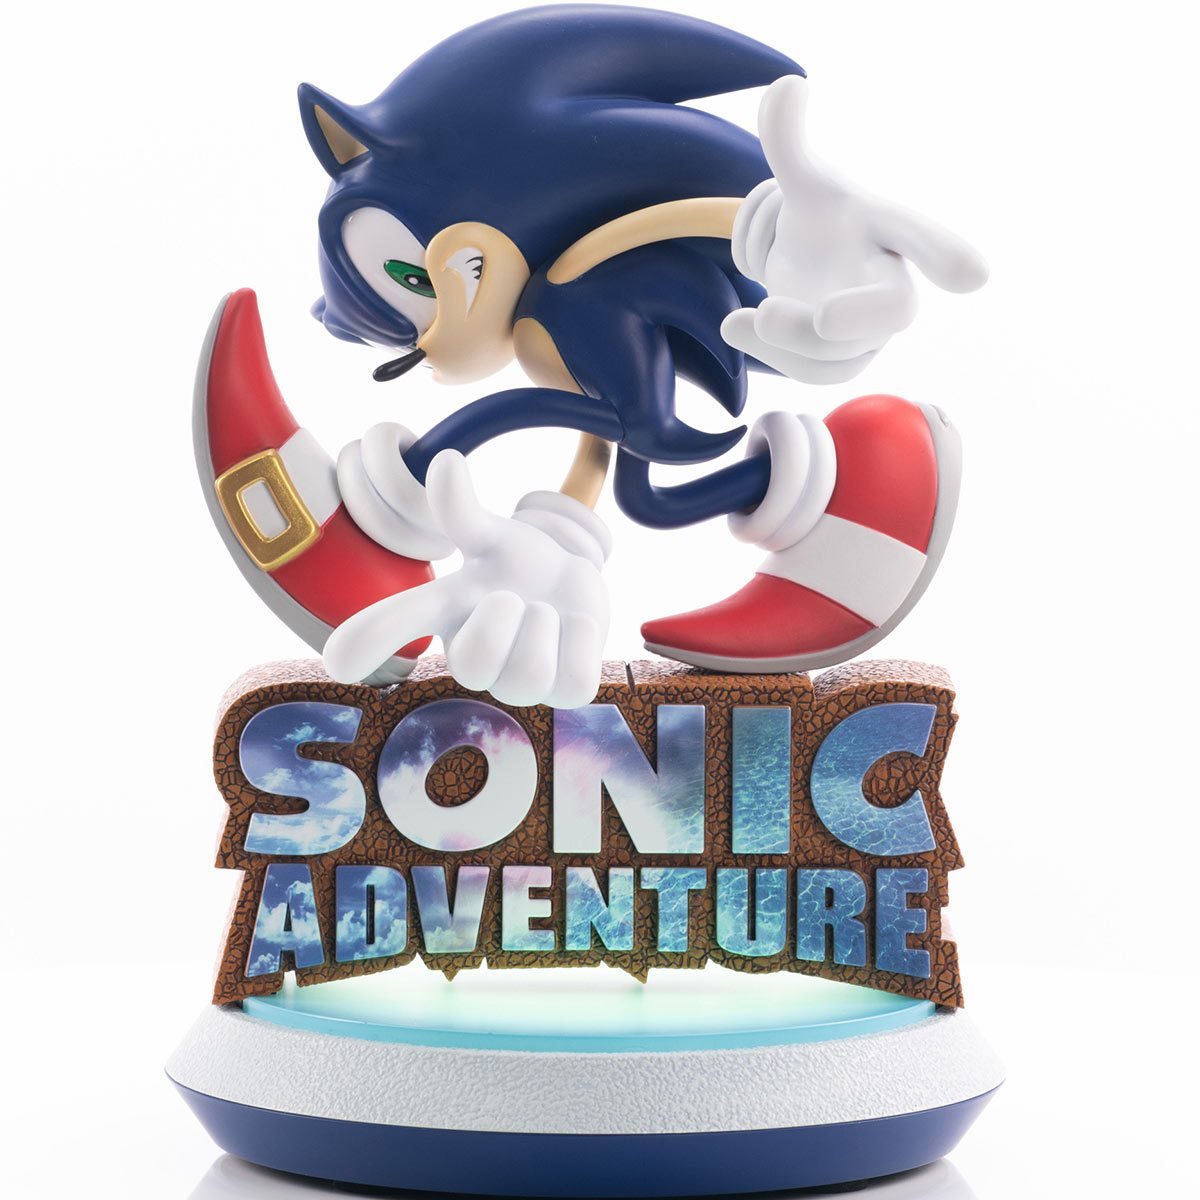 Sonic Adventure/Gallery  Sonic the hedgehog, Sonic, Sonic adventure